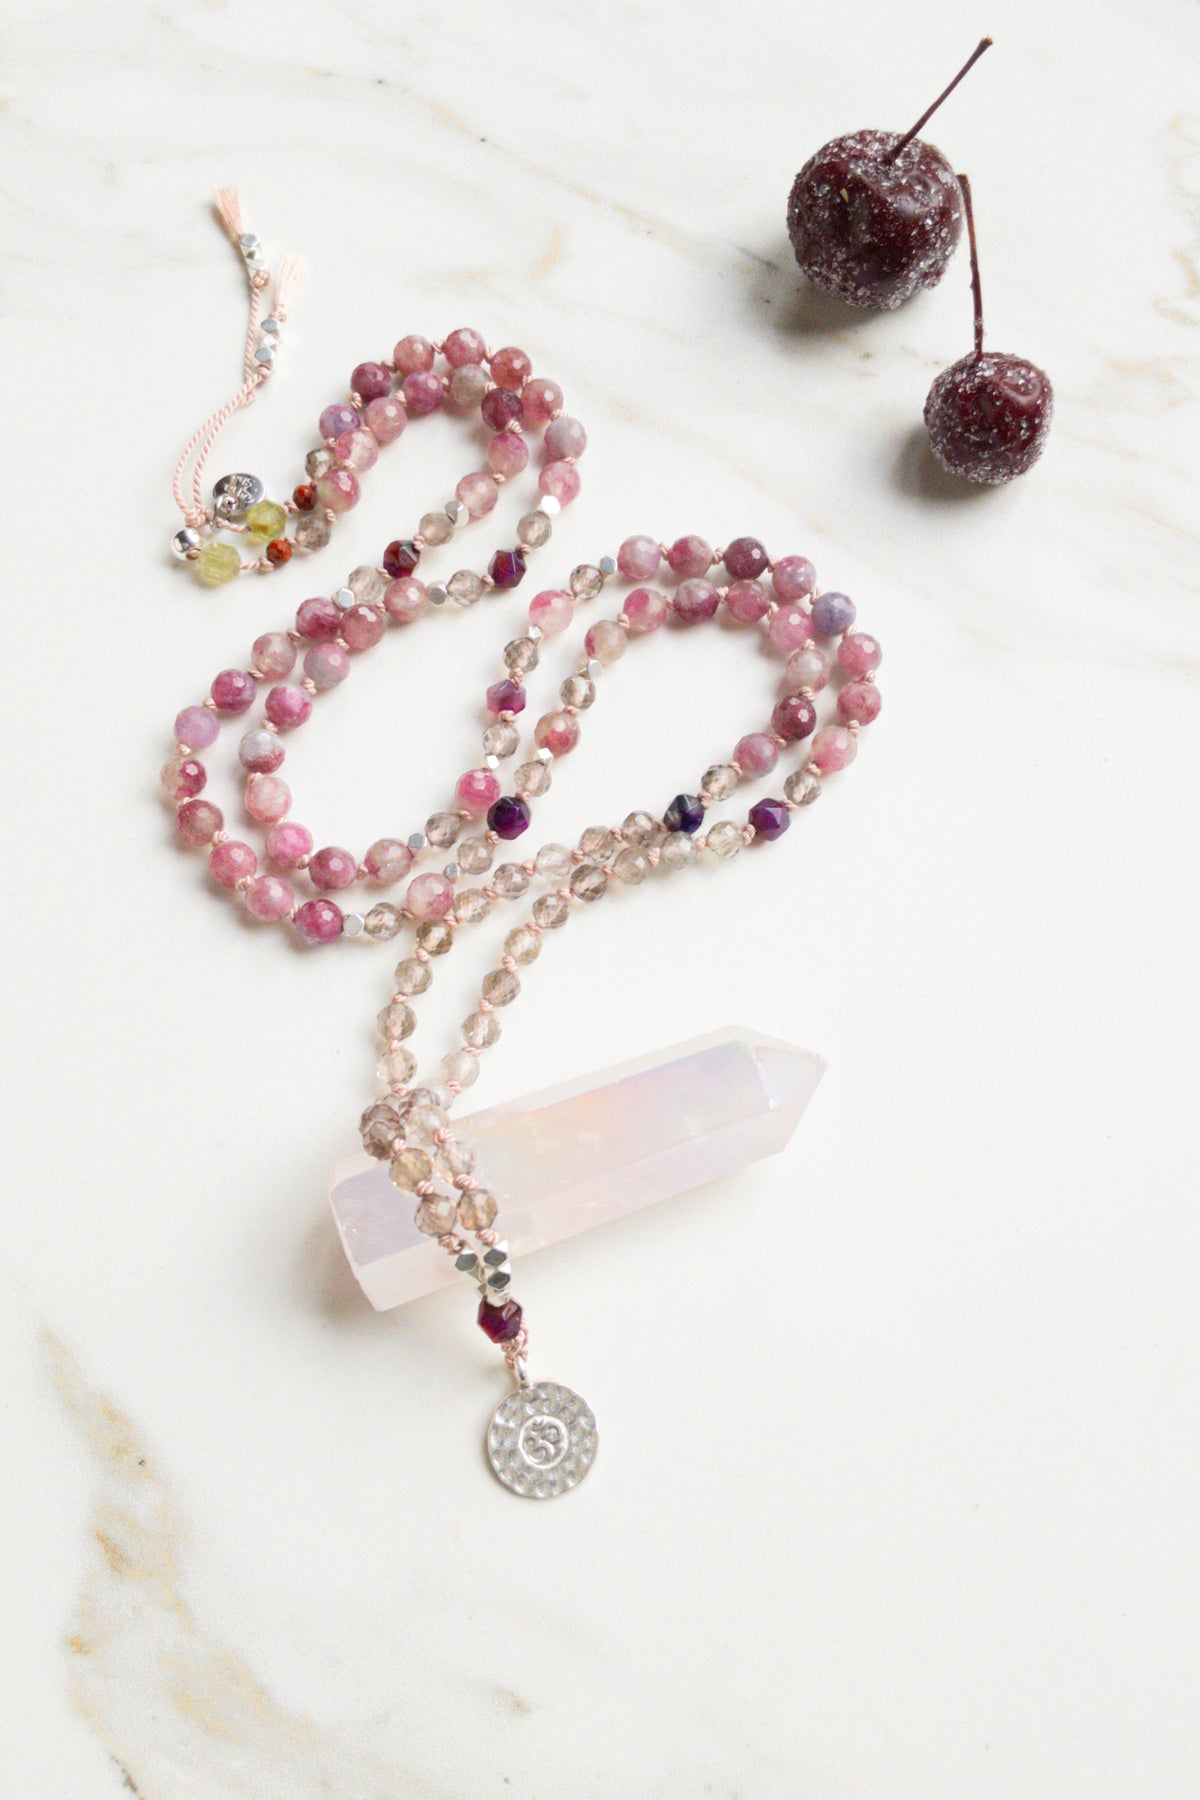 Smokey quartz gemstone rosary beads Necklace, brass angel wing pendant -  Heart Mala Yoga Jewellery